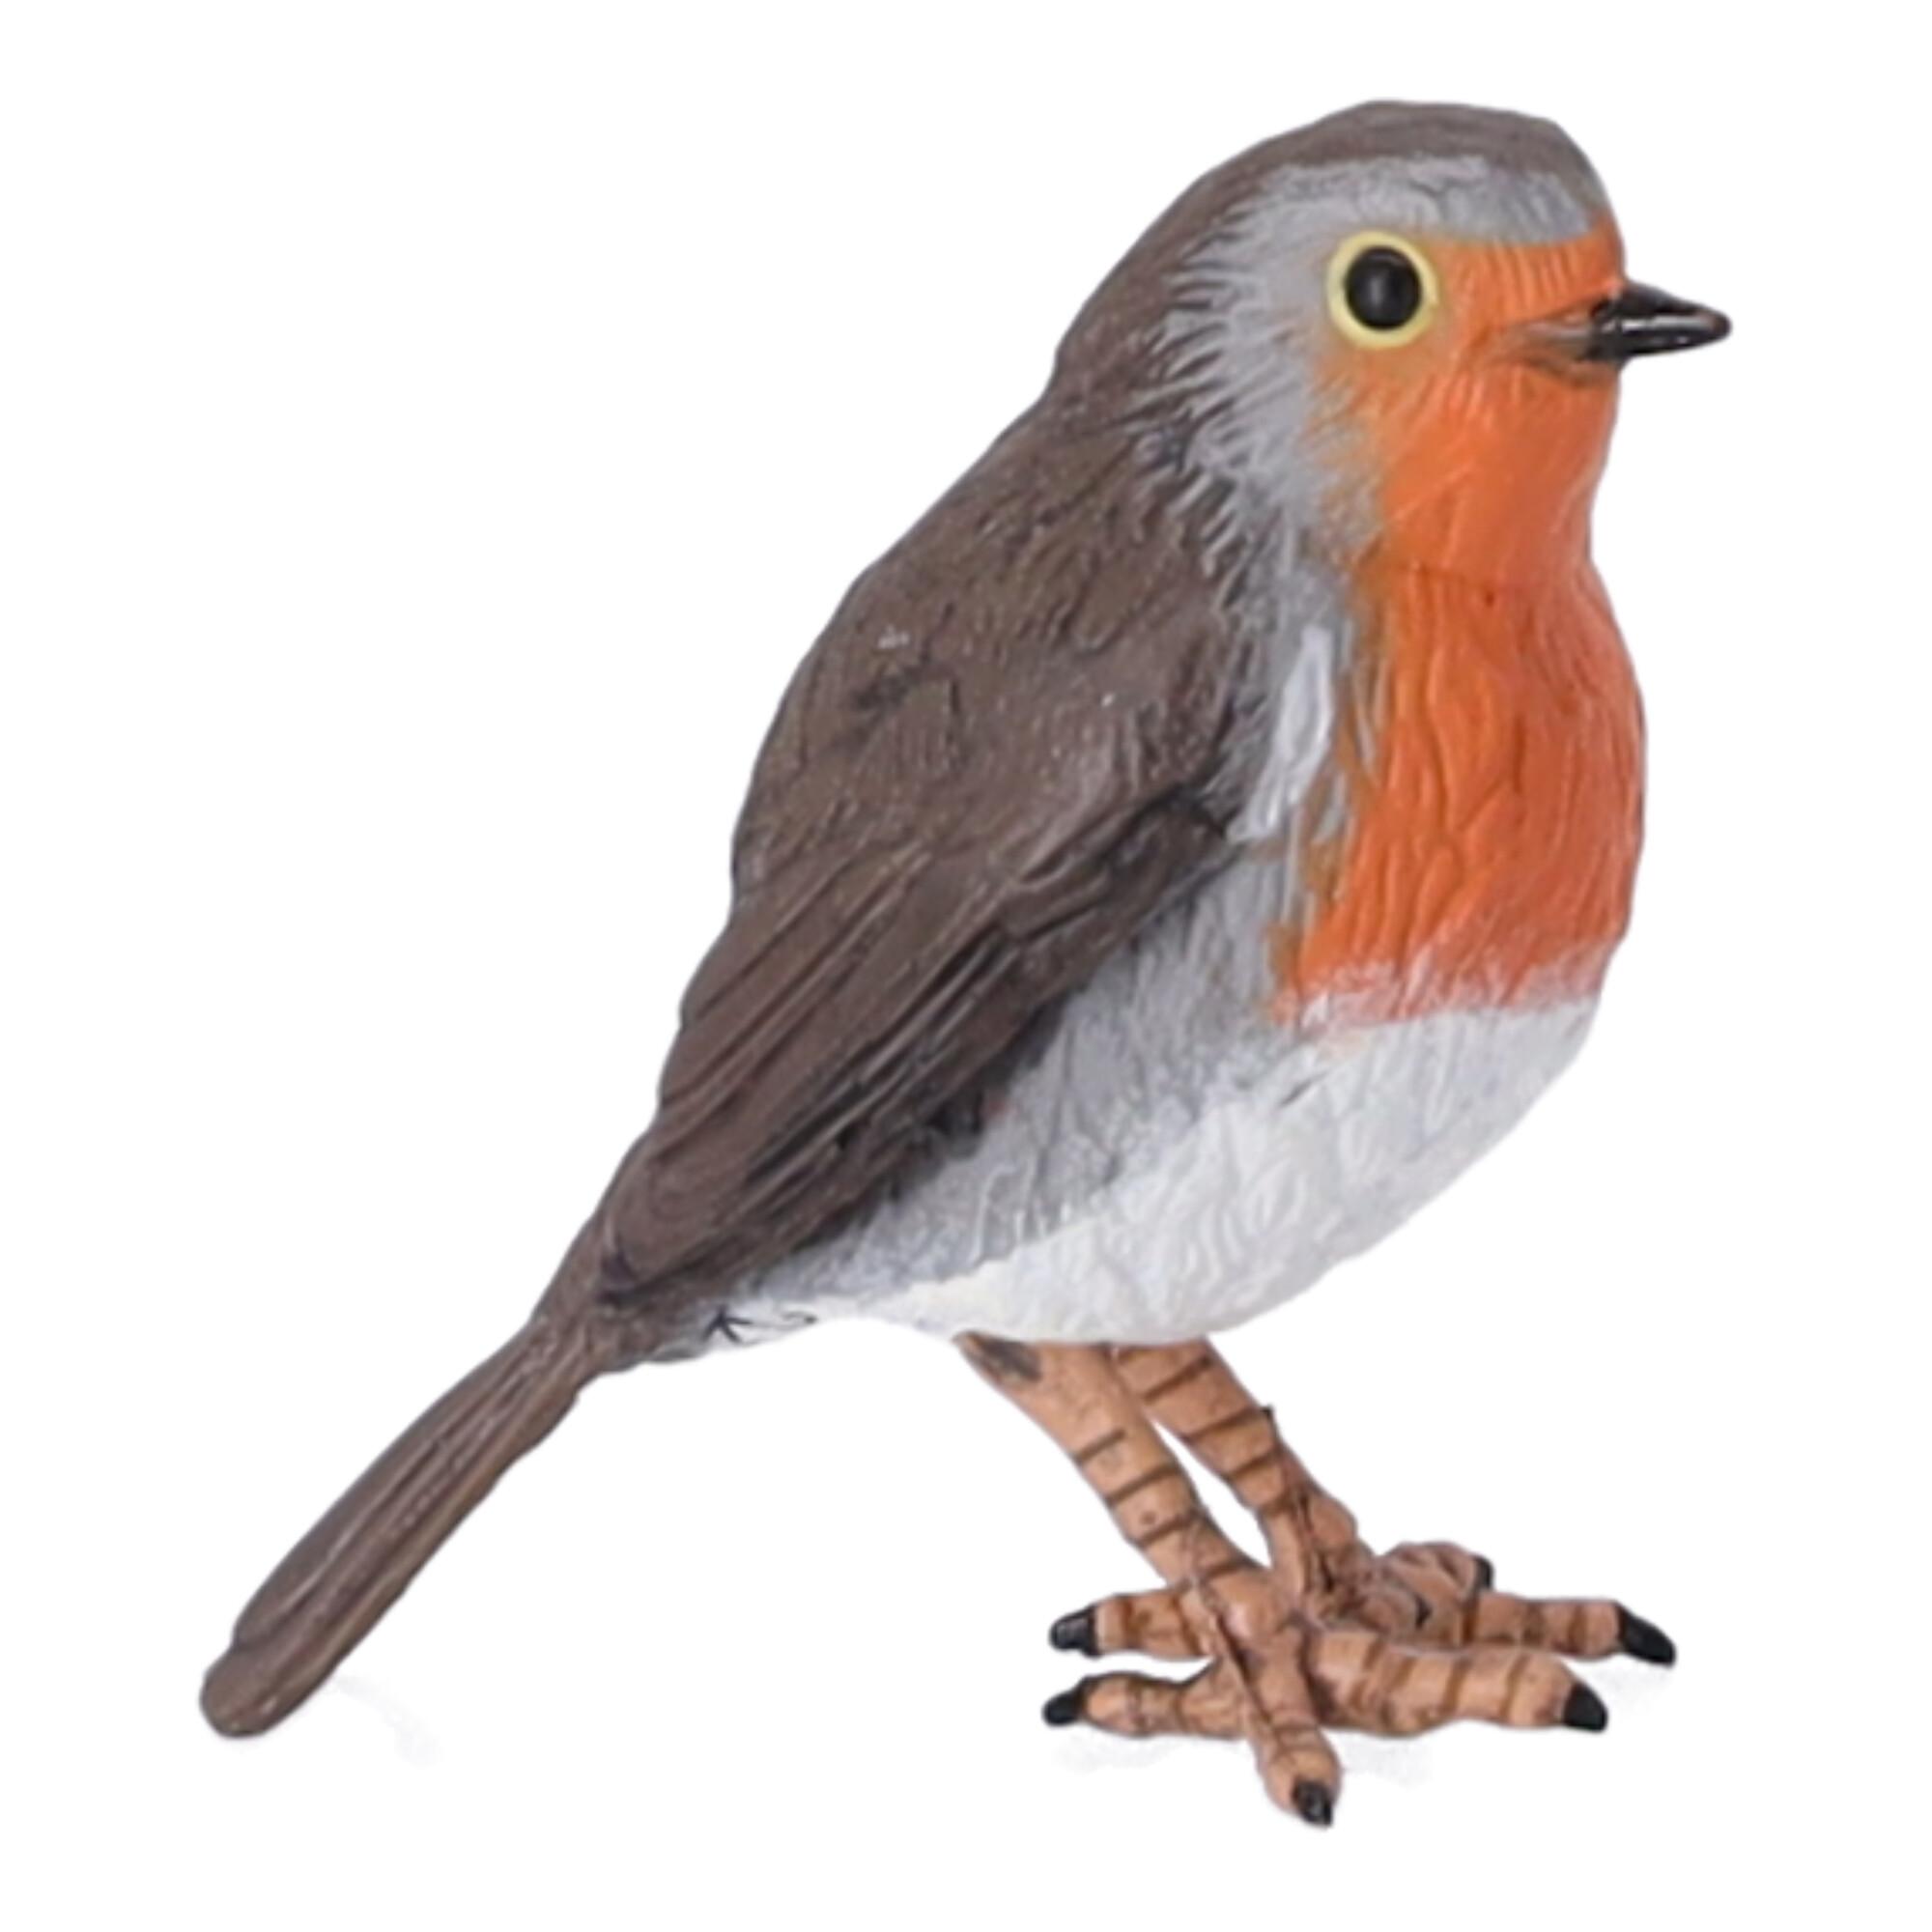 Collectible figurine Ruddy bird, Papo